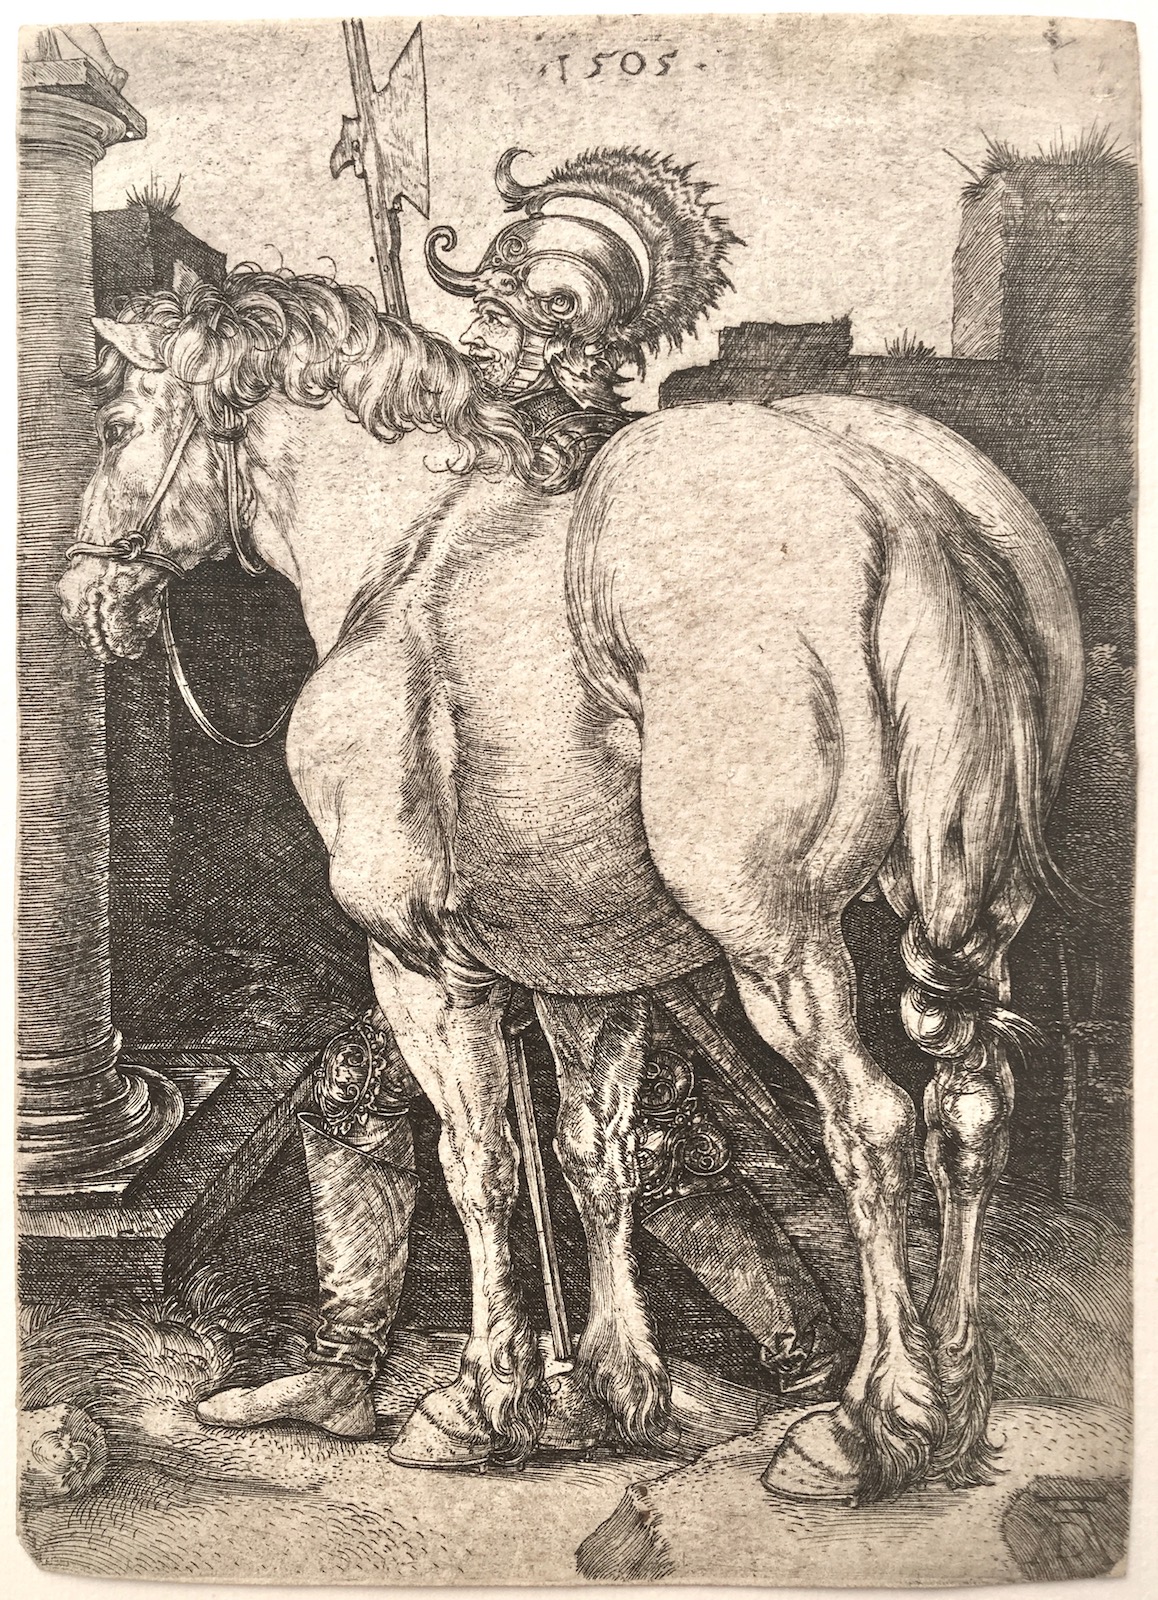 7003_Dürer_Grande Cavallo_mm 167 x 119